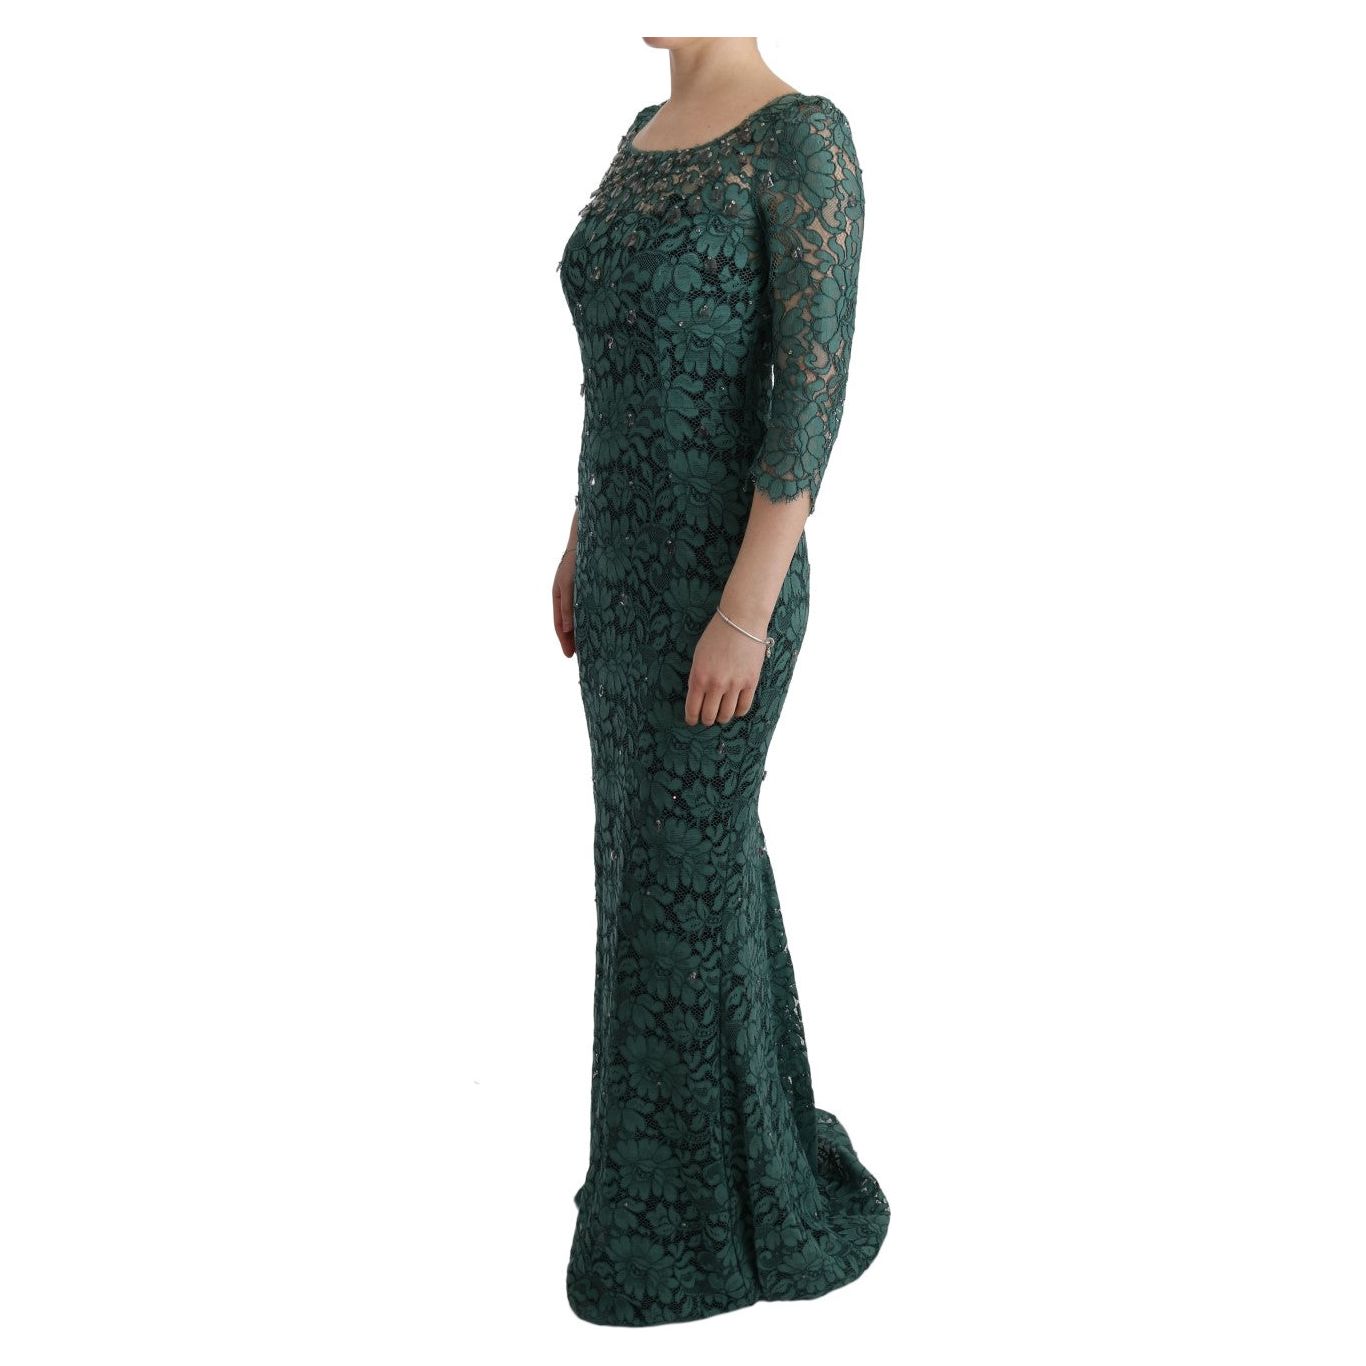 Dolce & Gabbana Elegant Green Crystal Embellished Sheath Dress green-floral-crystal-ricamo-sheath-dress 445509-green-floral-crystal-ricamo-sheath-dress-1.jpg